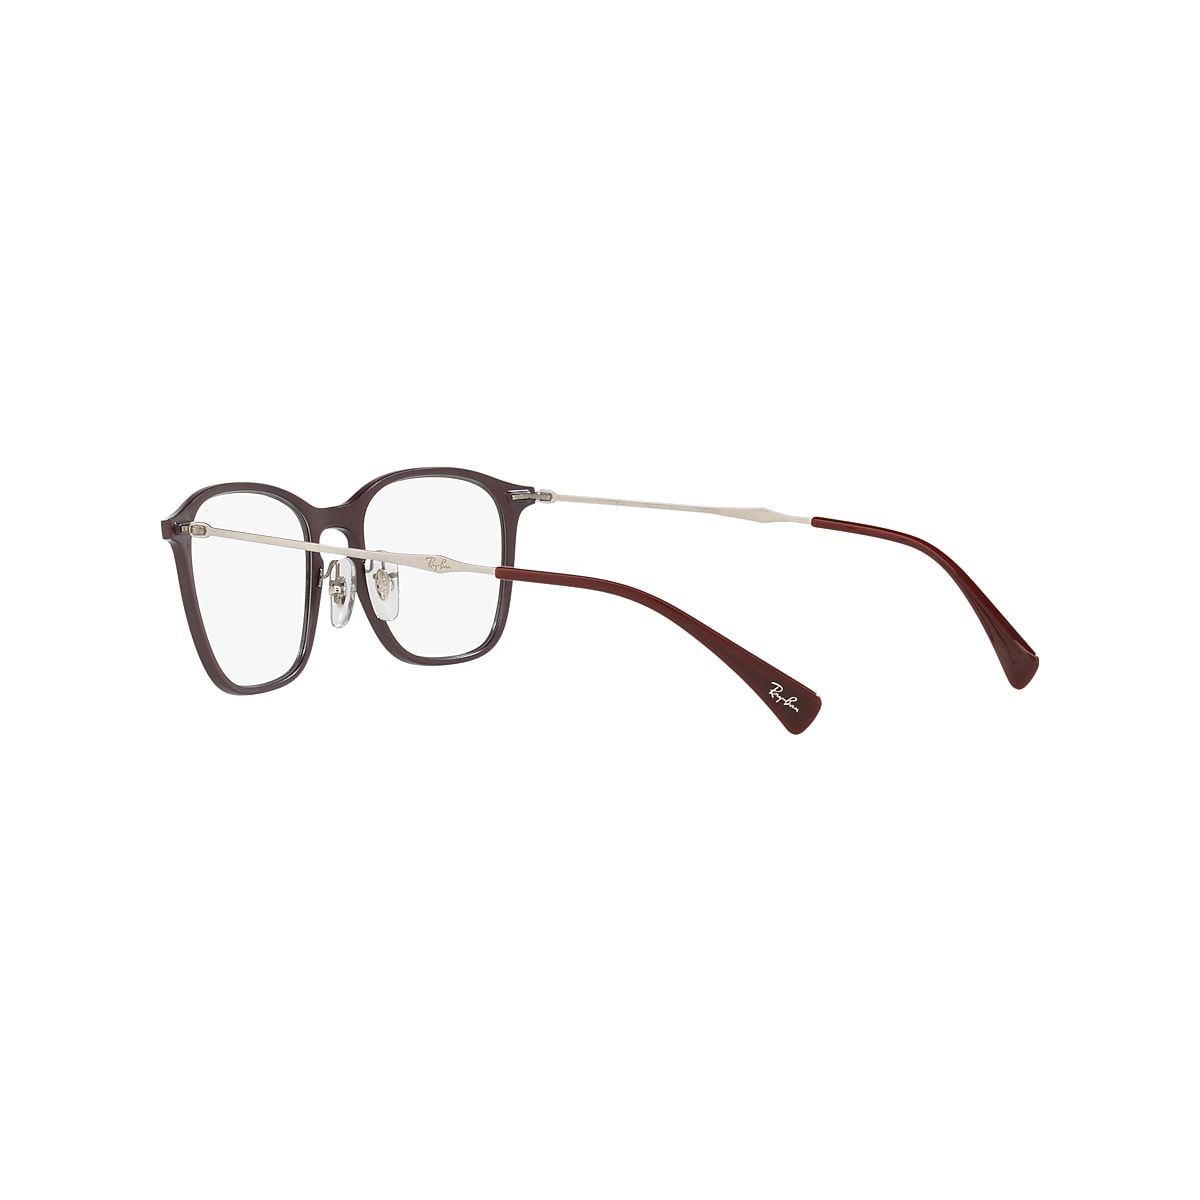 Rb8955 Optics Eyeglasses with Violet Frame | Ray-Ban®